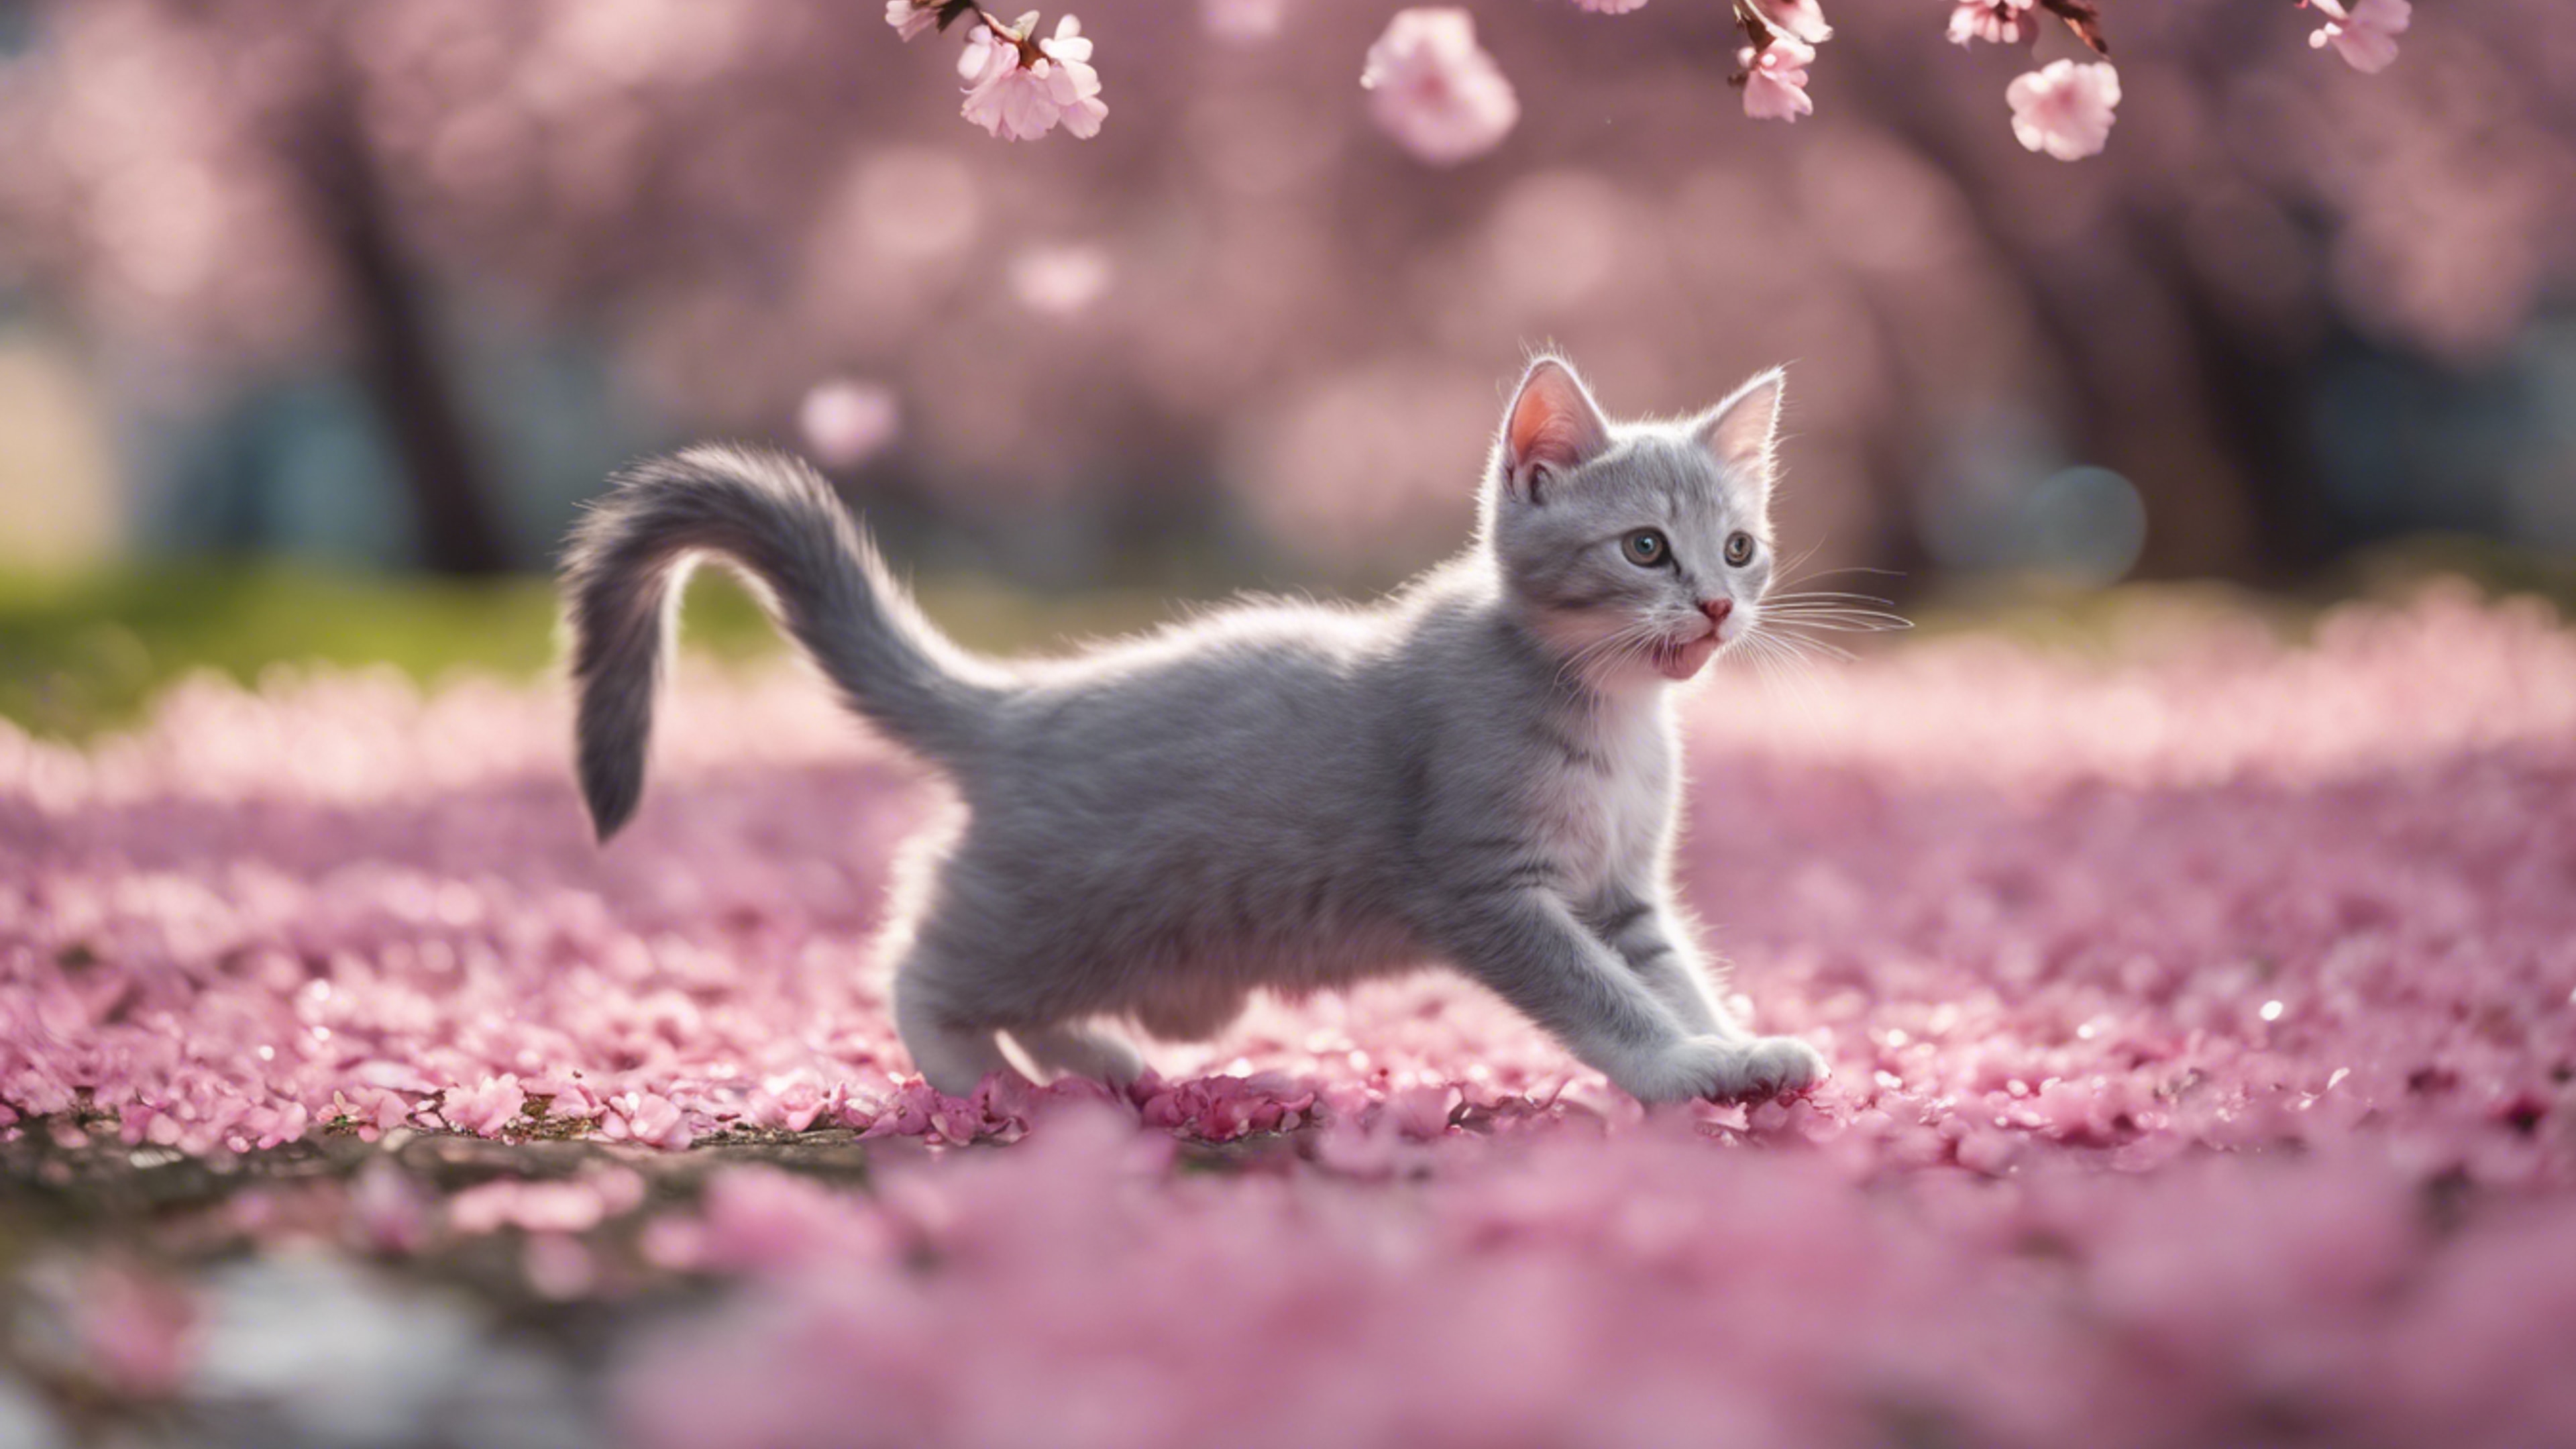 A gray kitten chasing a fluttering pink cherry blossom petal壁紙[7bdce686b9964e1e8bfb]